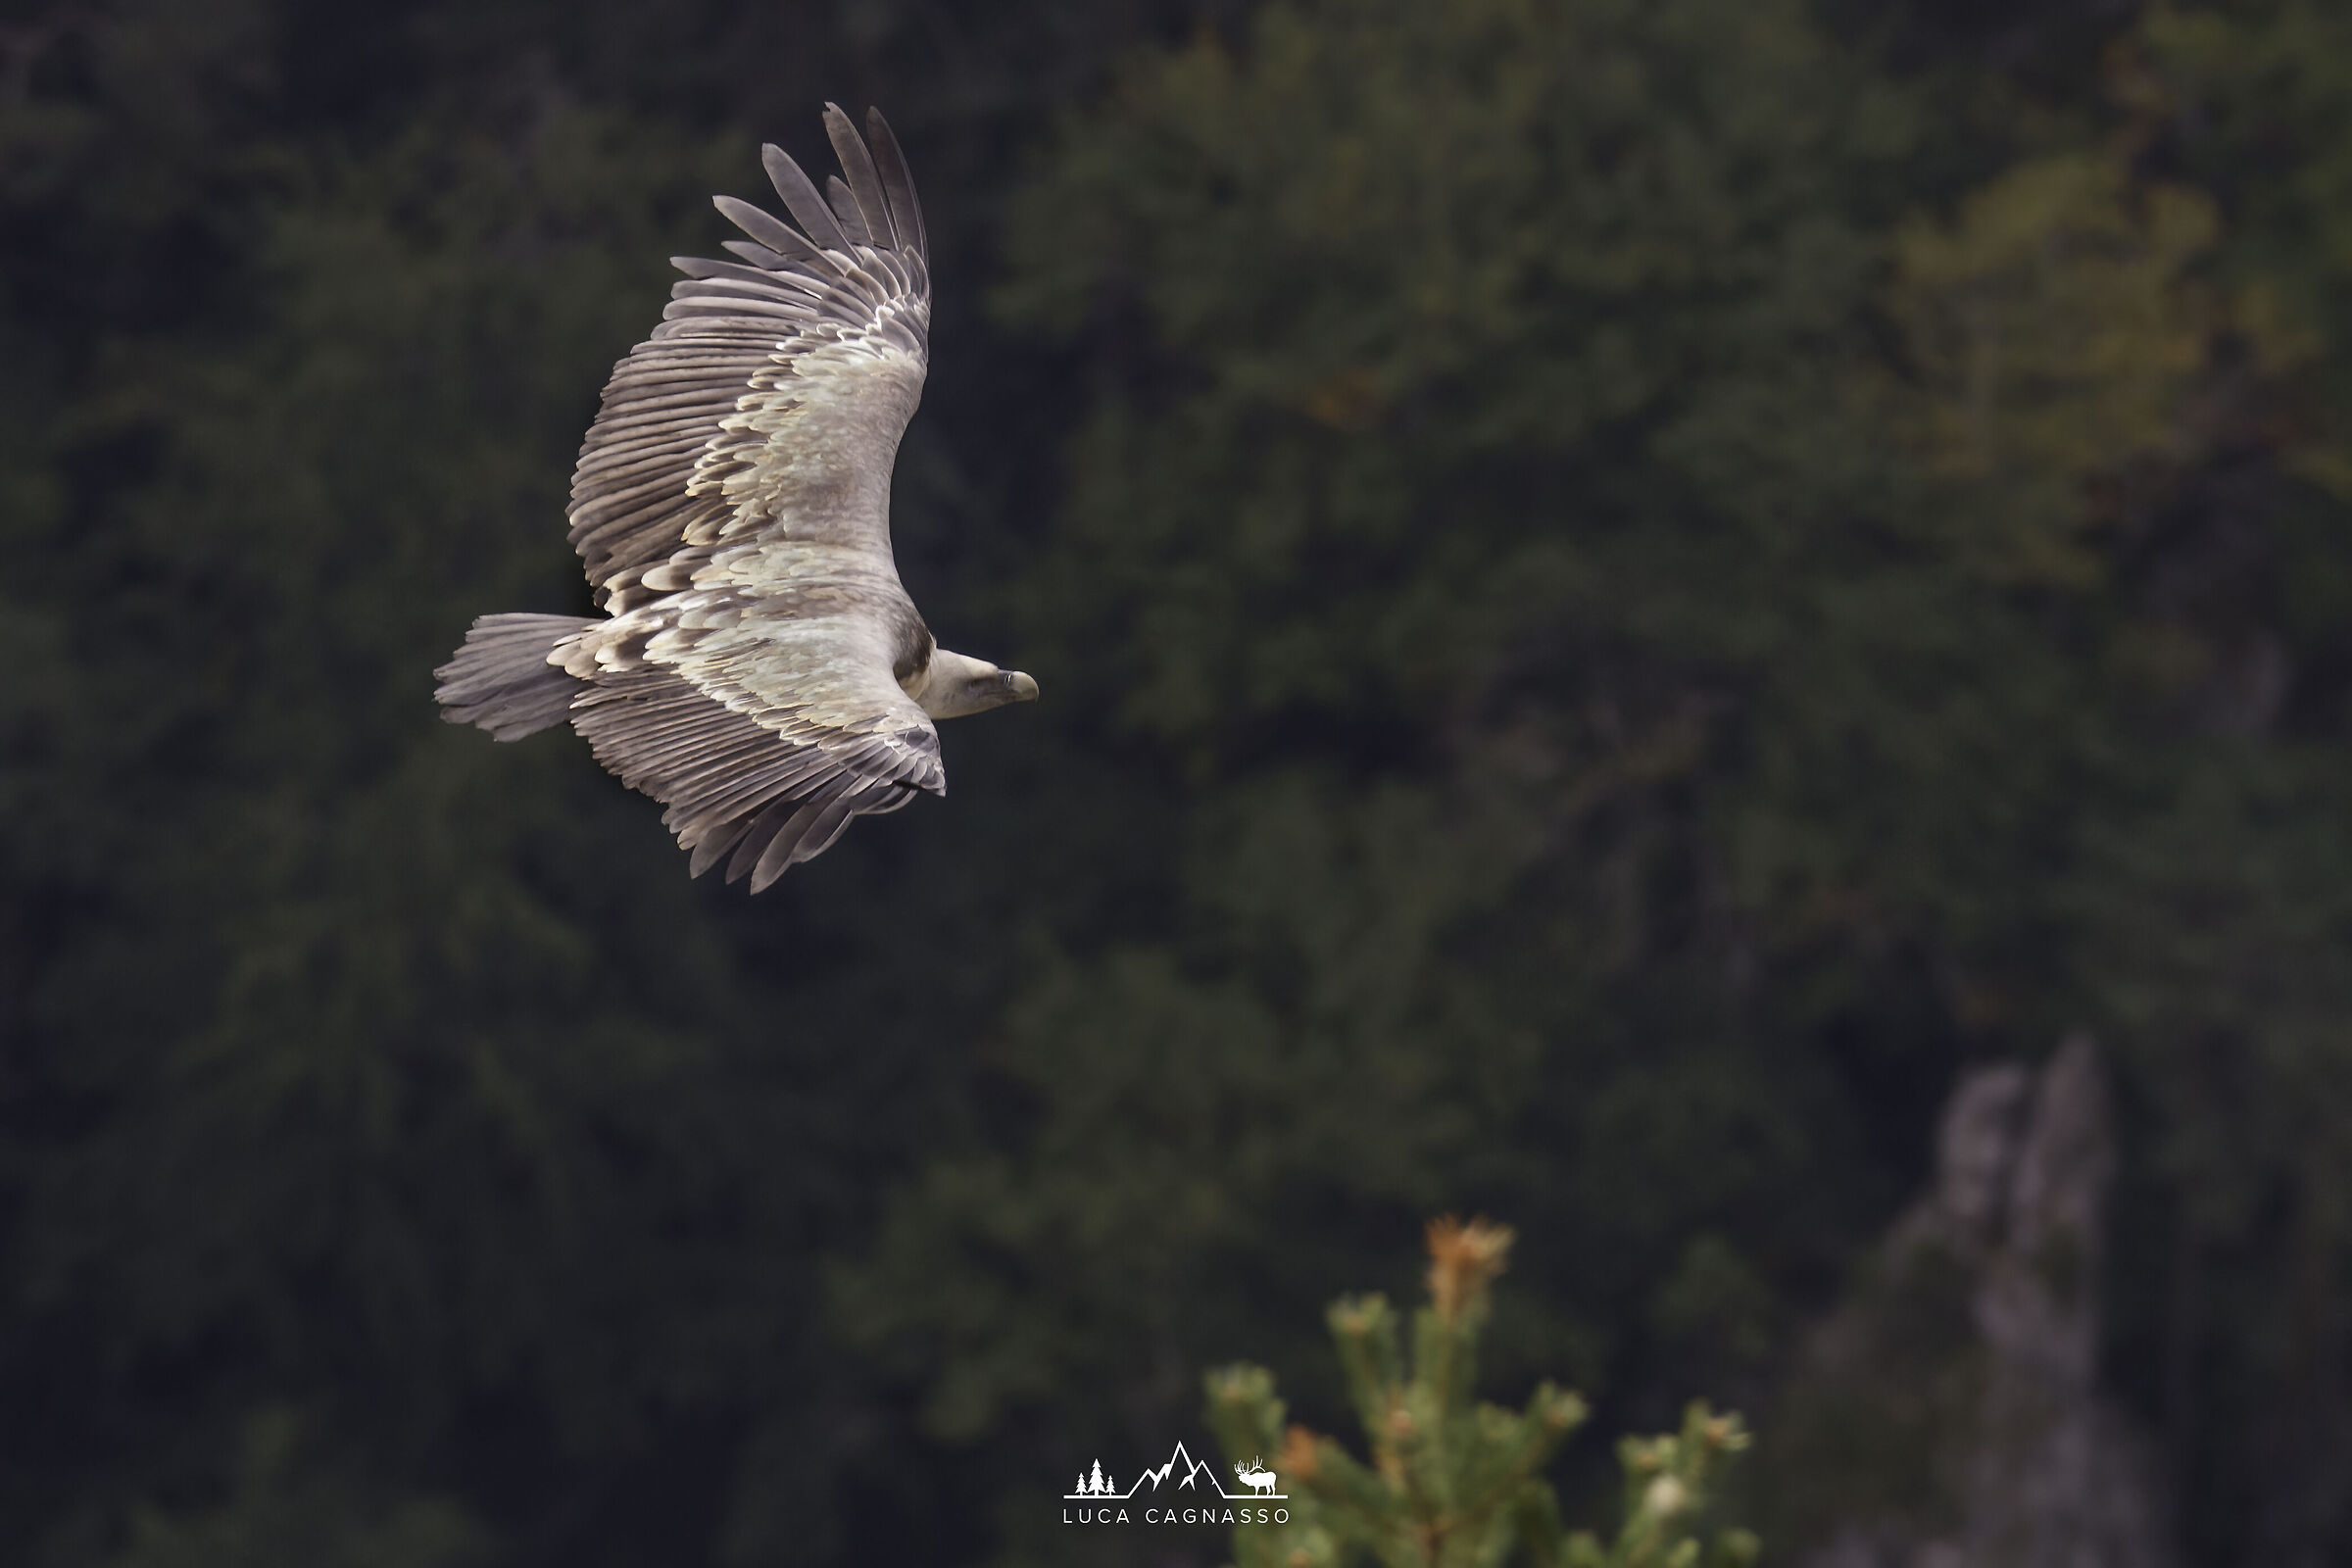 Griffon flying in the Gorge du Verdon...